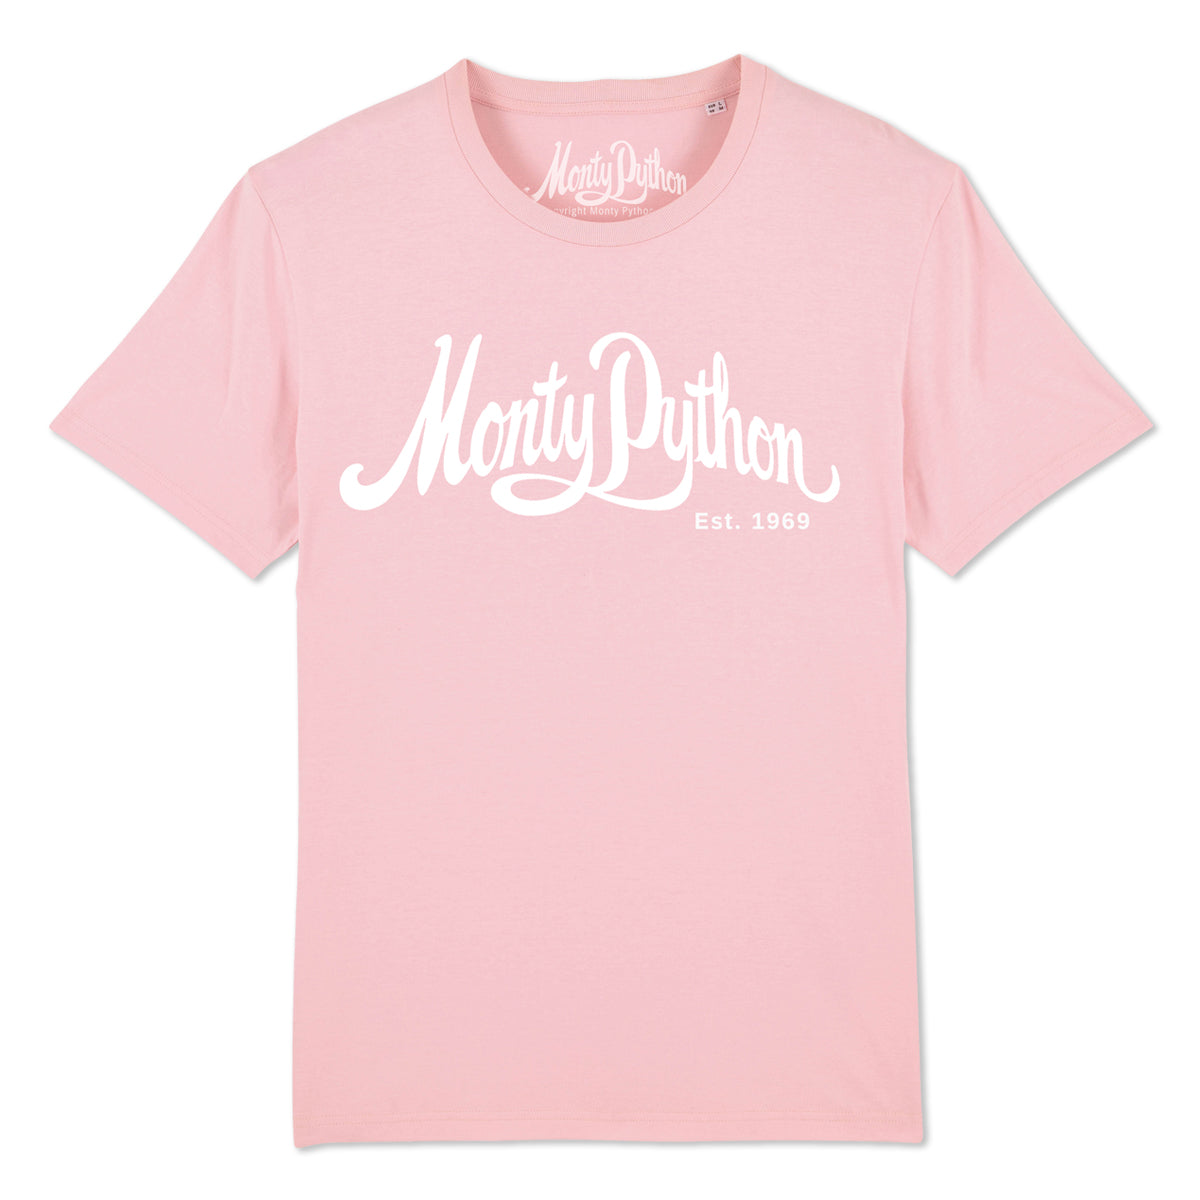 Monty Python - Monty Python 1969 Pink T-Shirt